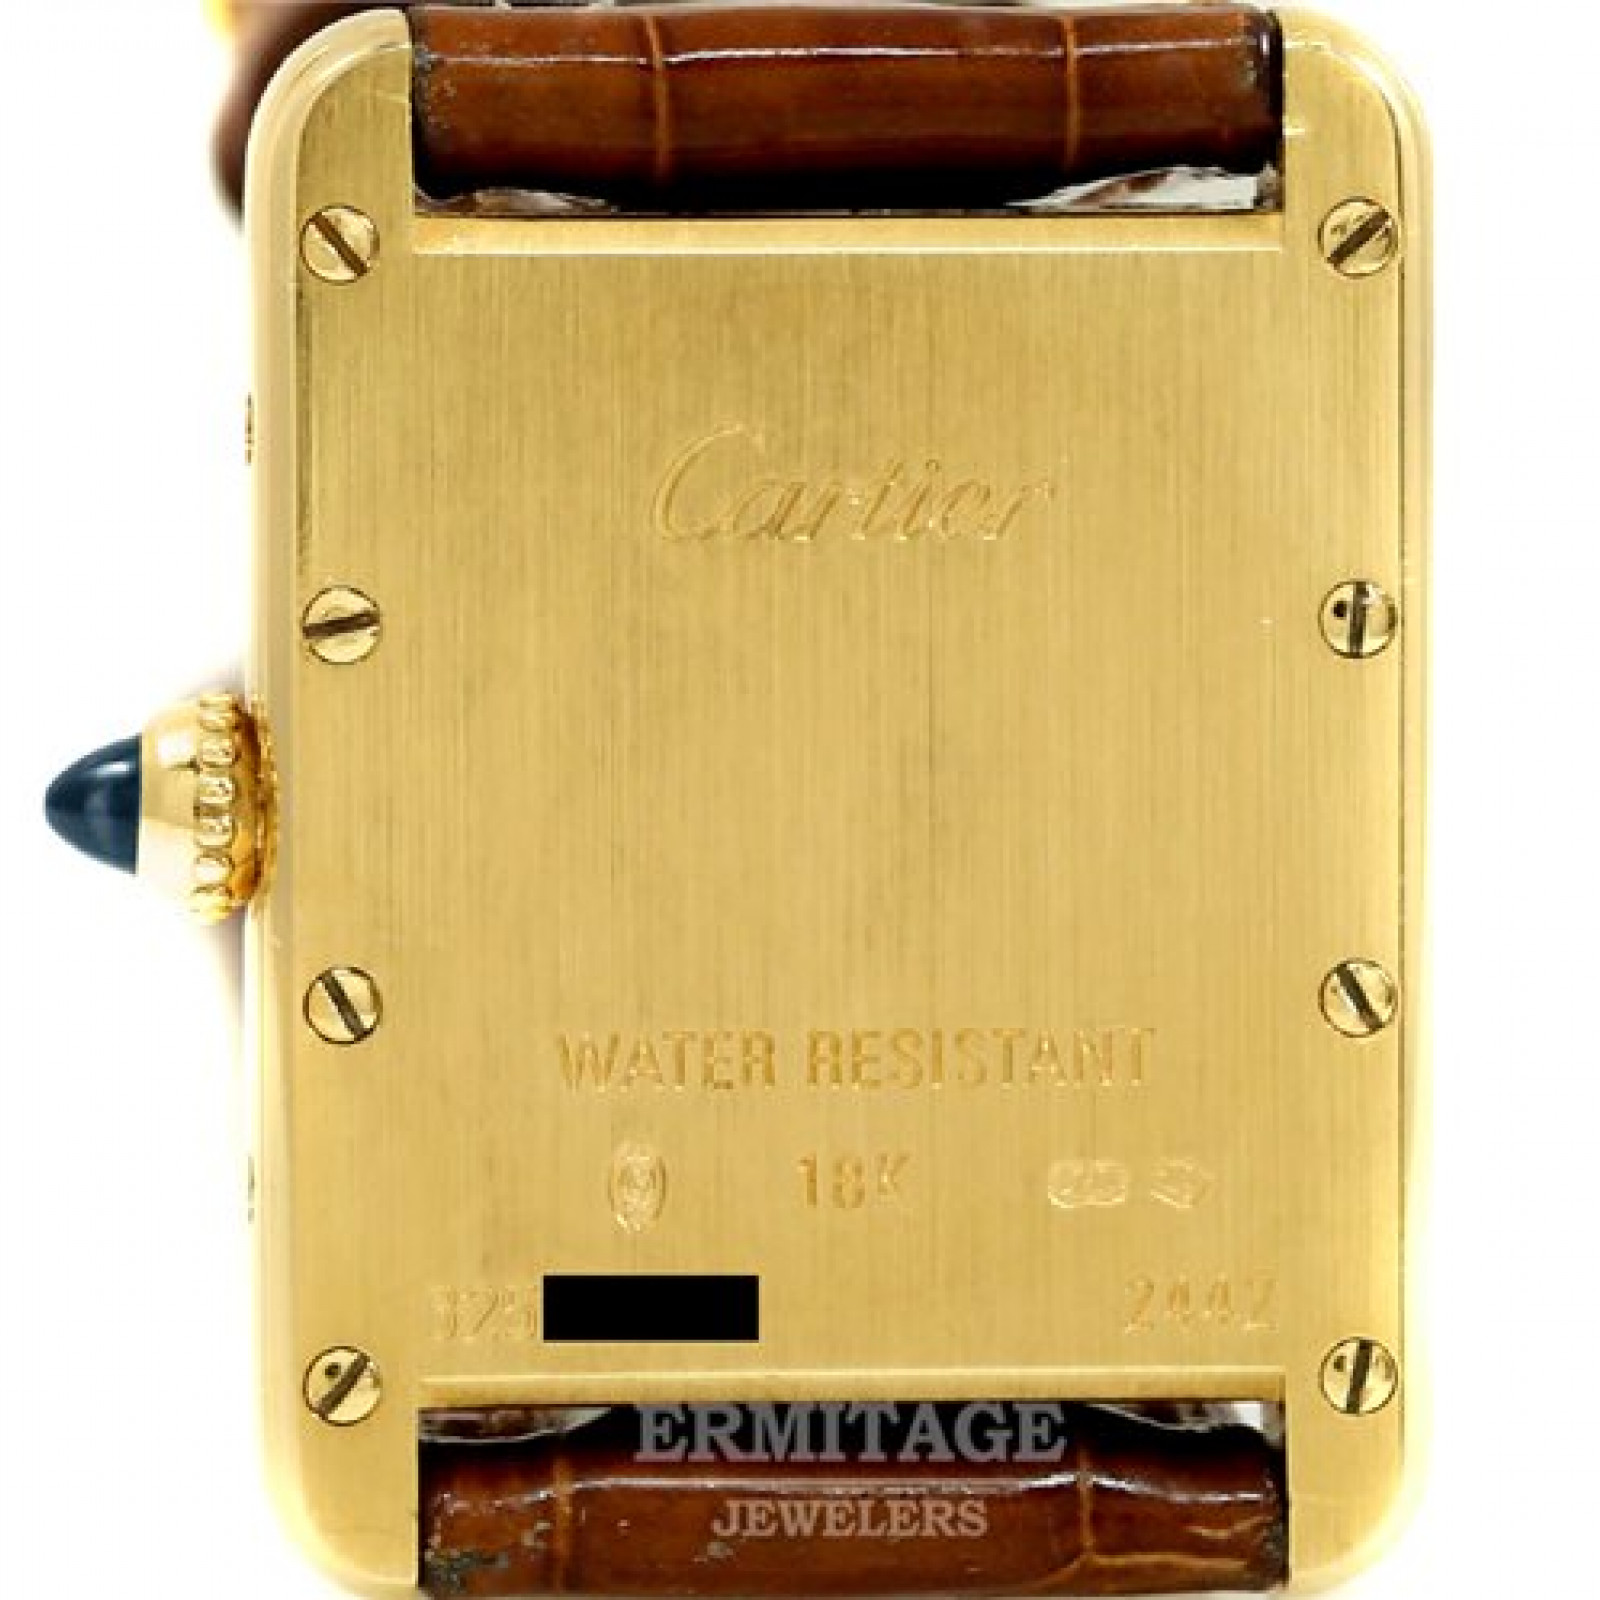 Cartier Pre-owned Cartier Tank Louis Ladies Watch W1529856 - Pre